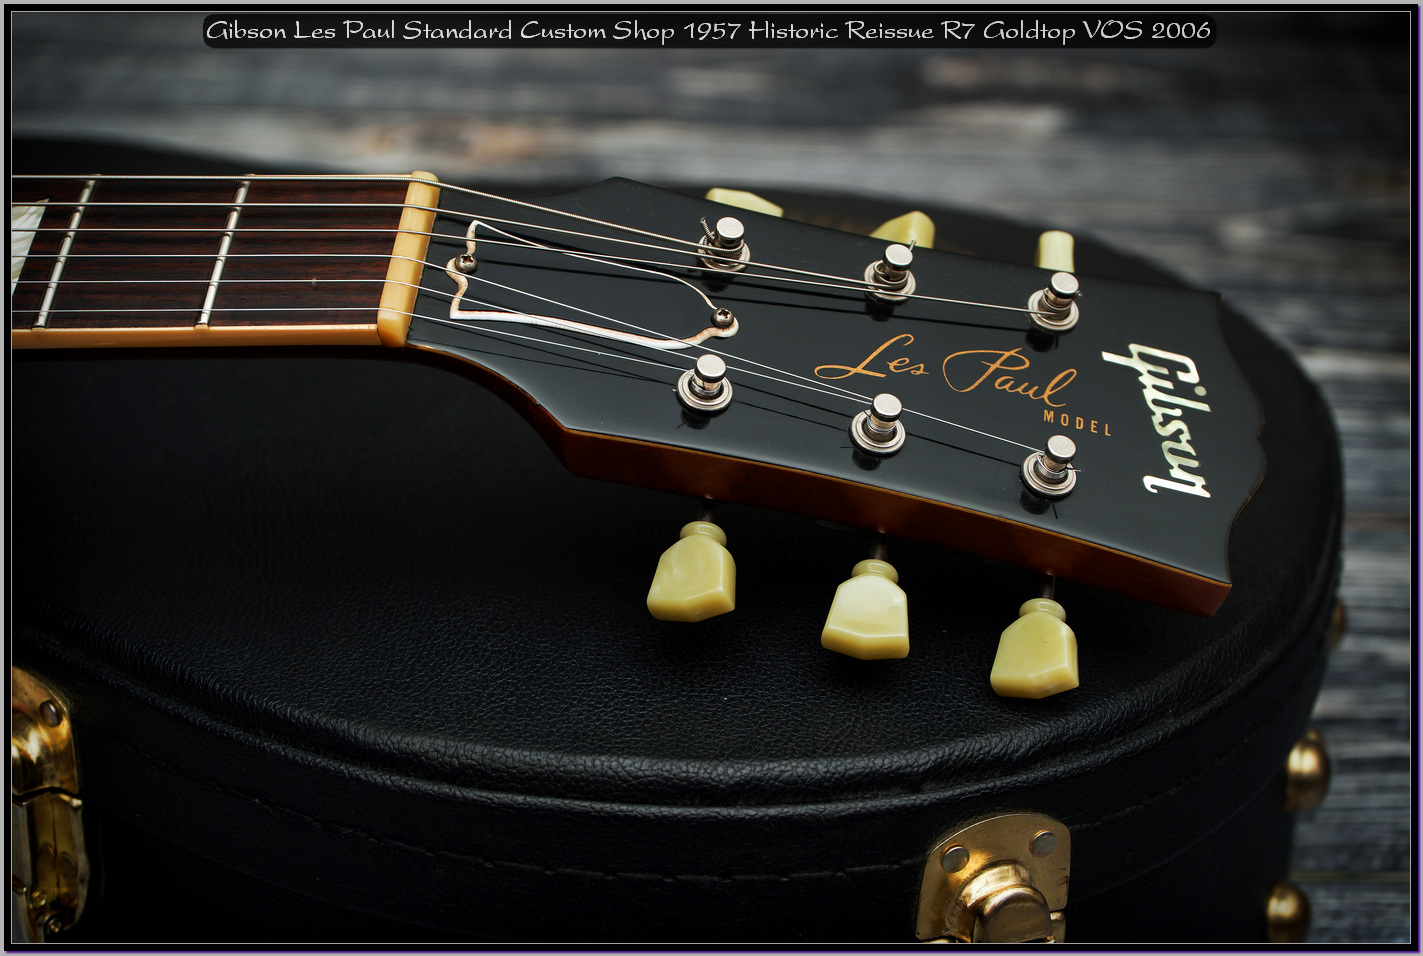 Gibson Les Paul Standard Custom Shop 1957 Historic Reissue R7 Goldtop VOS 2006 04_x1400.jpg